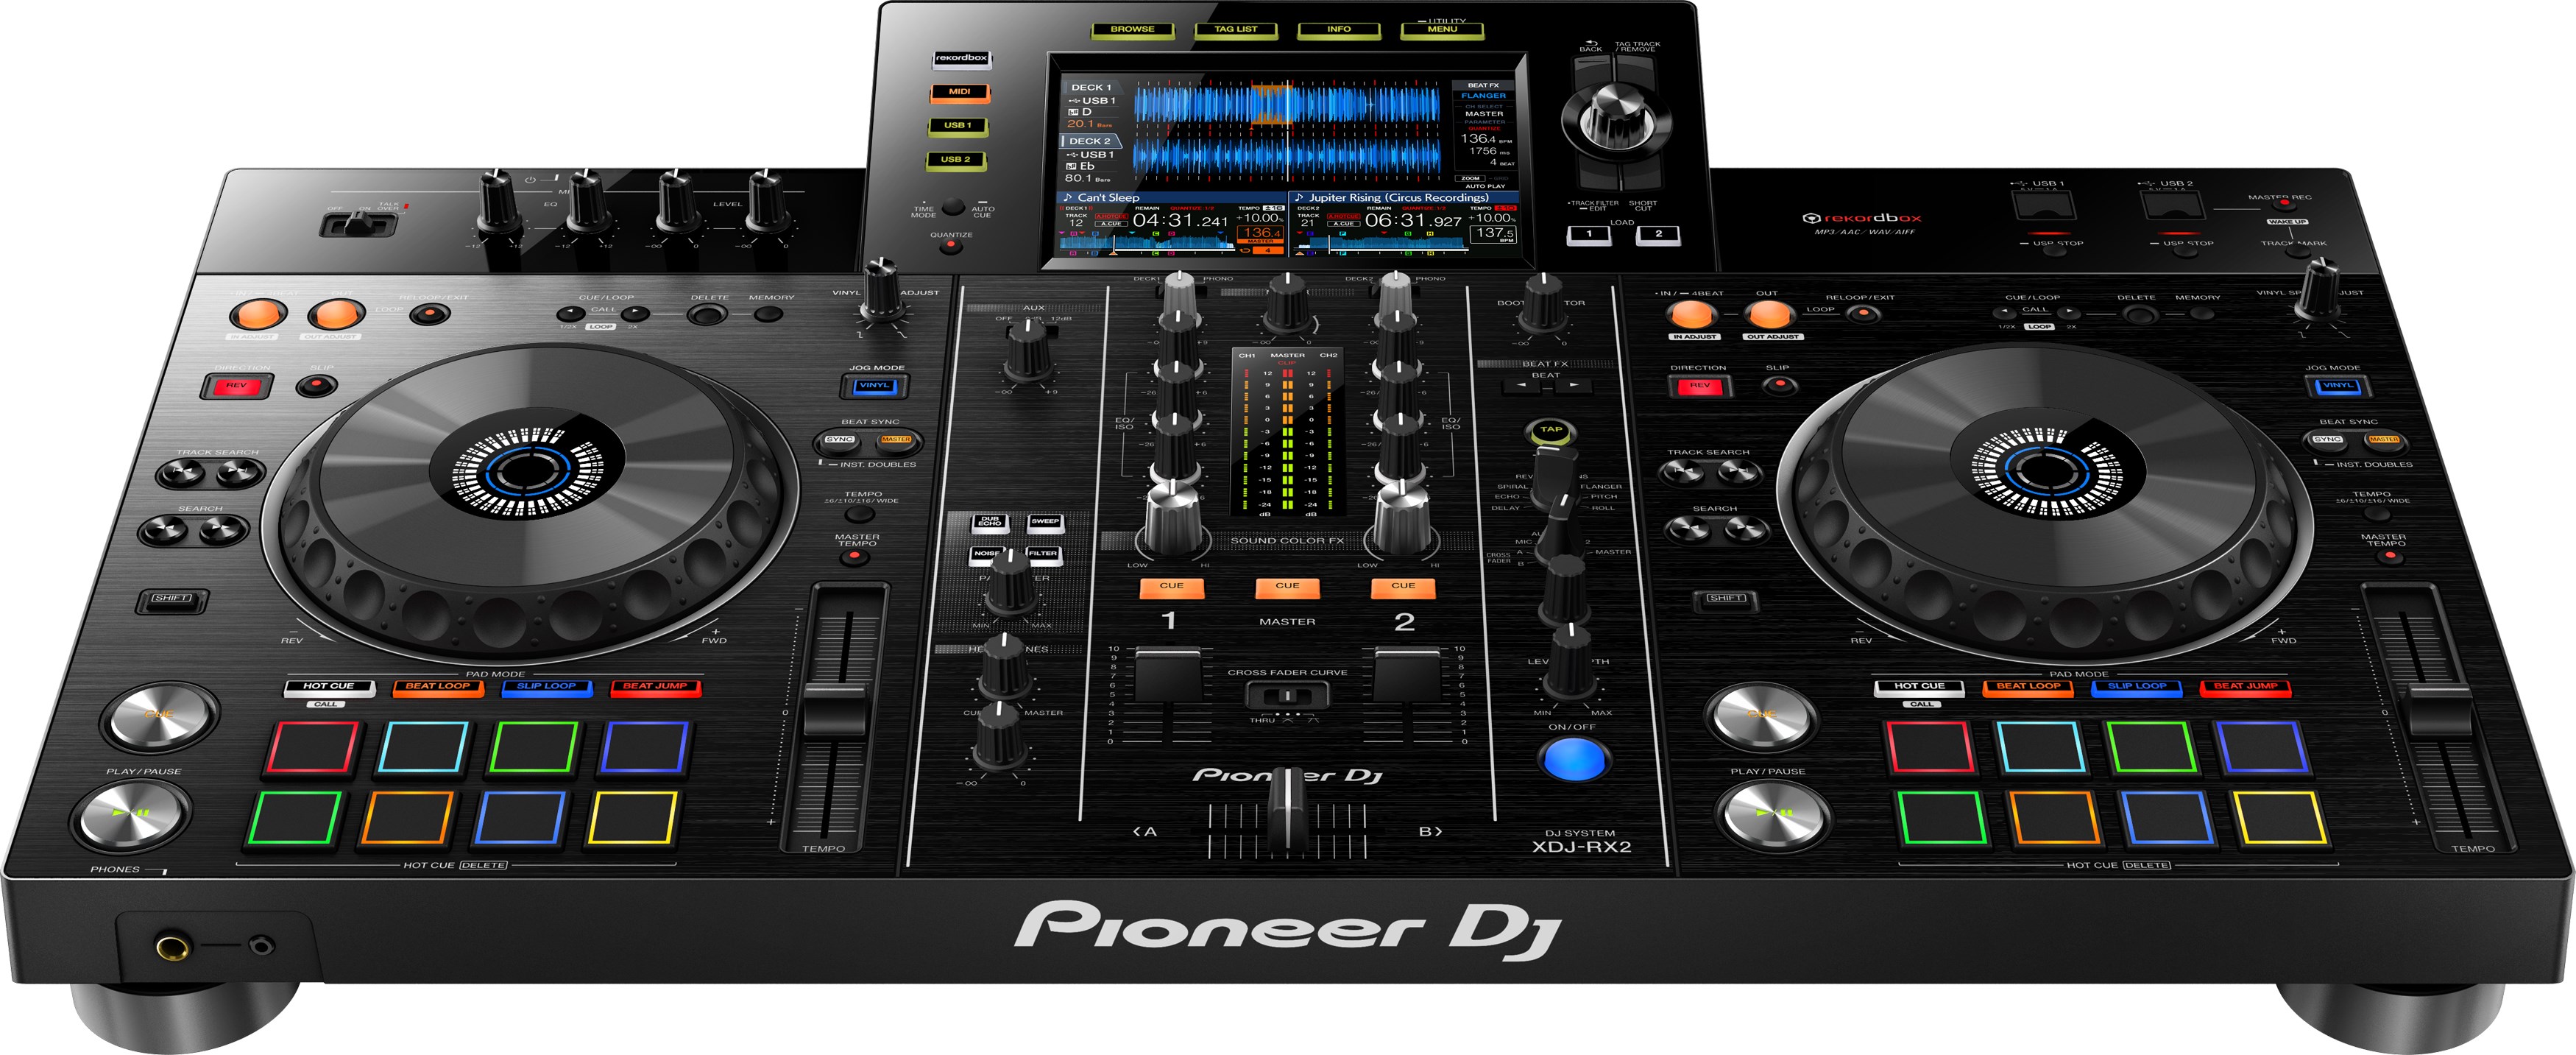 Pioneer Dj Xdj-rx2 - Standalone DJ Controller - Variation 2